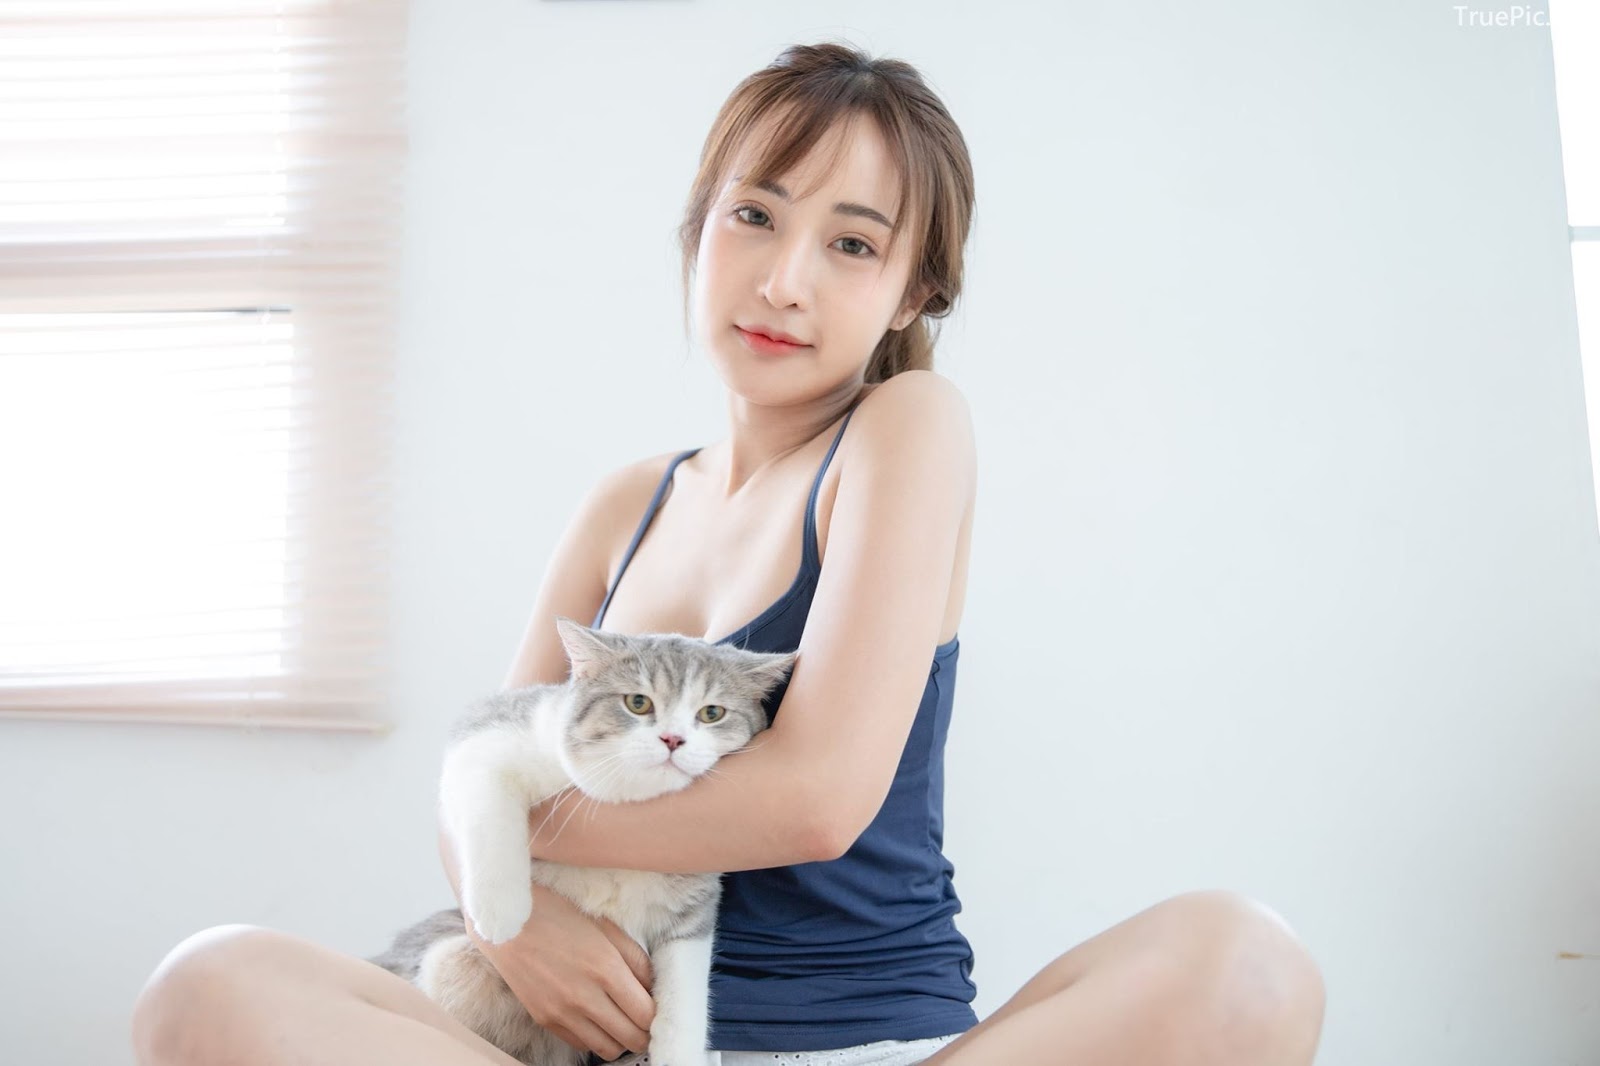 Thailand model - Thanyarat Charoenpornkittada - Stay at home with beautiul cat - TruePic.net - Picture 2